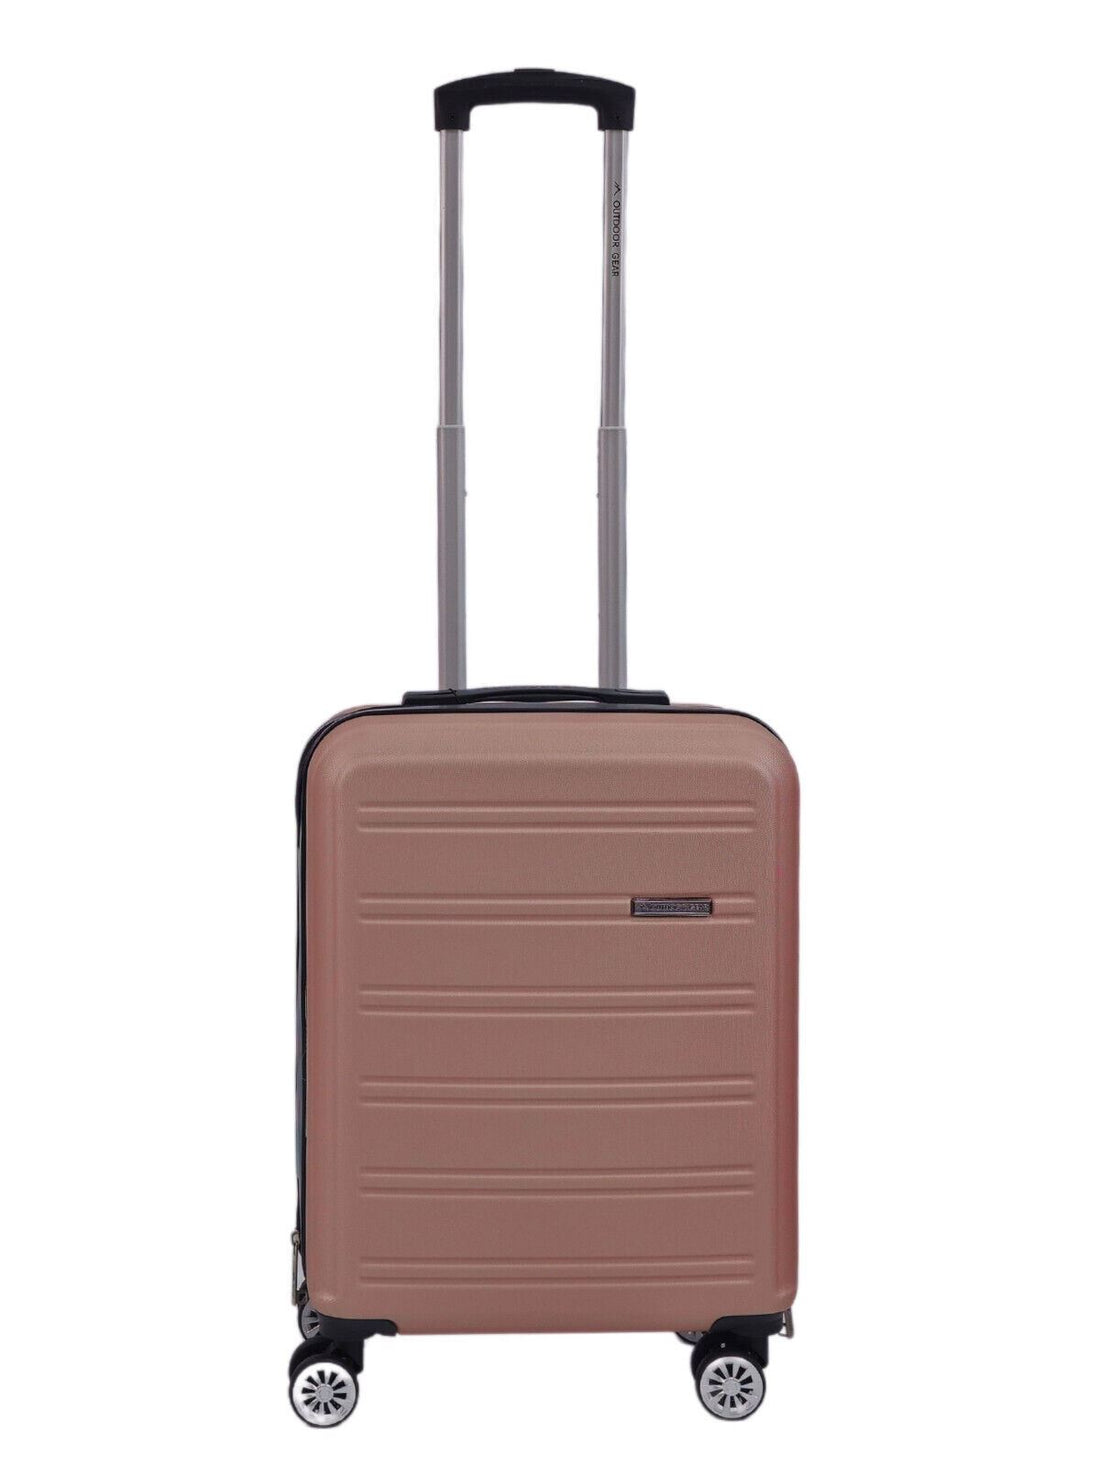 Hardshell Rose Gold Suitcase Robust ABS Lightweight Luggage Bag